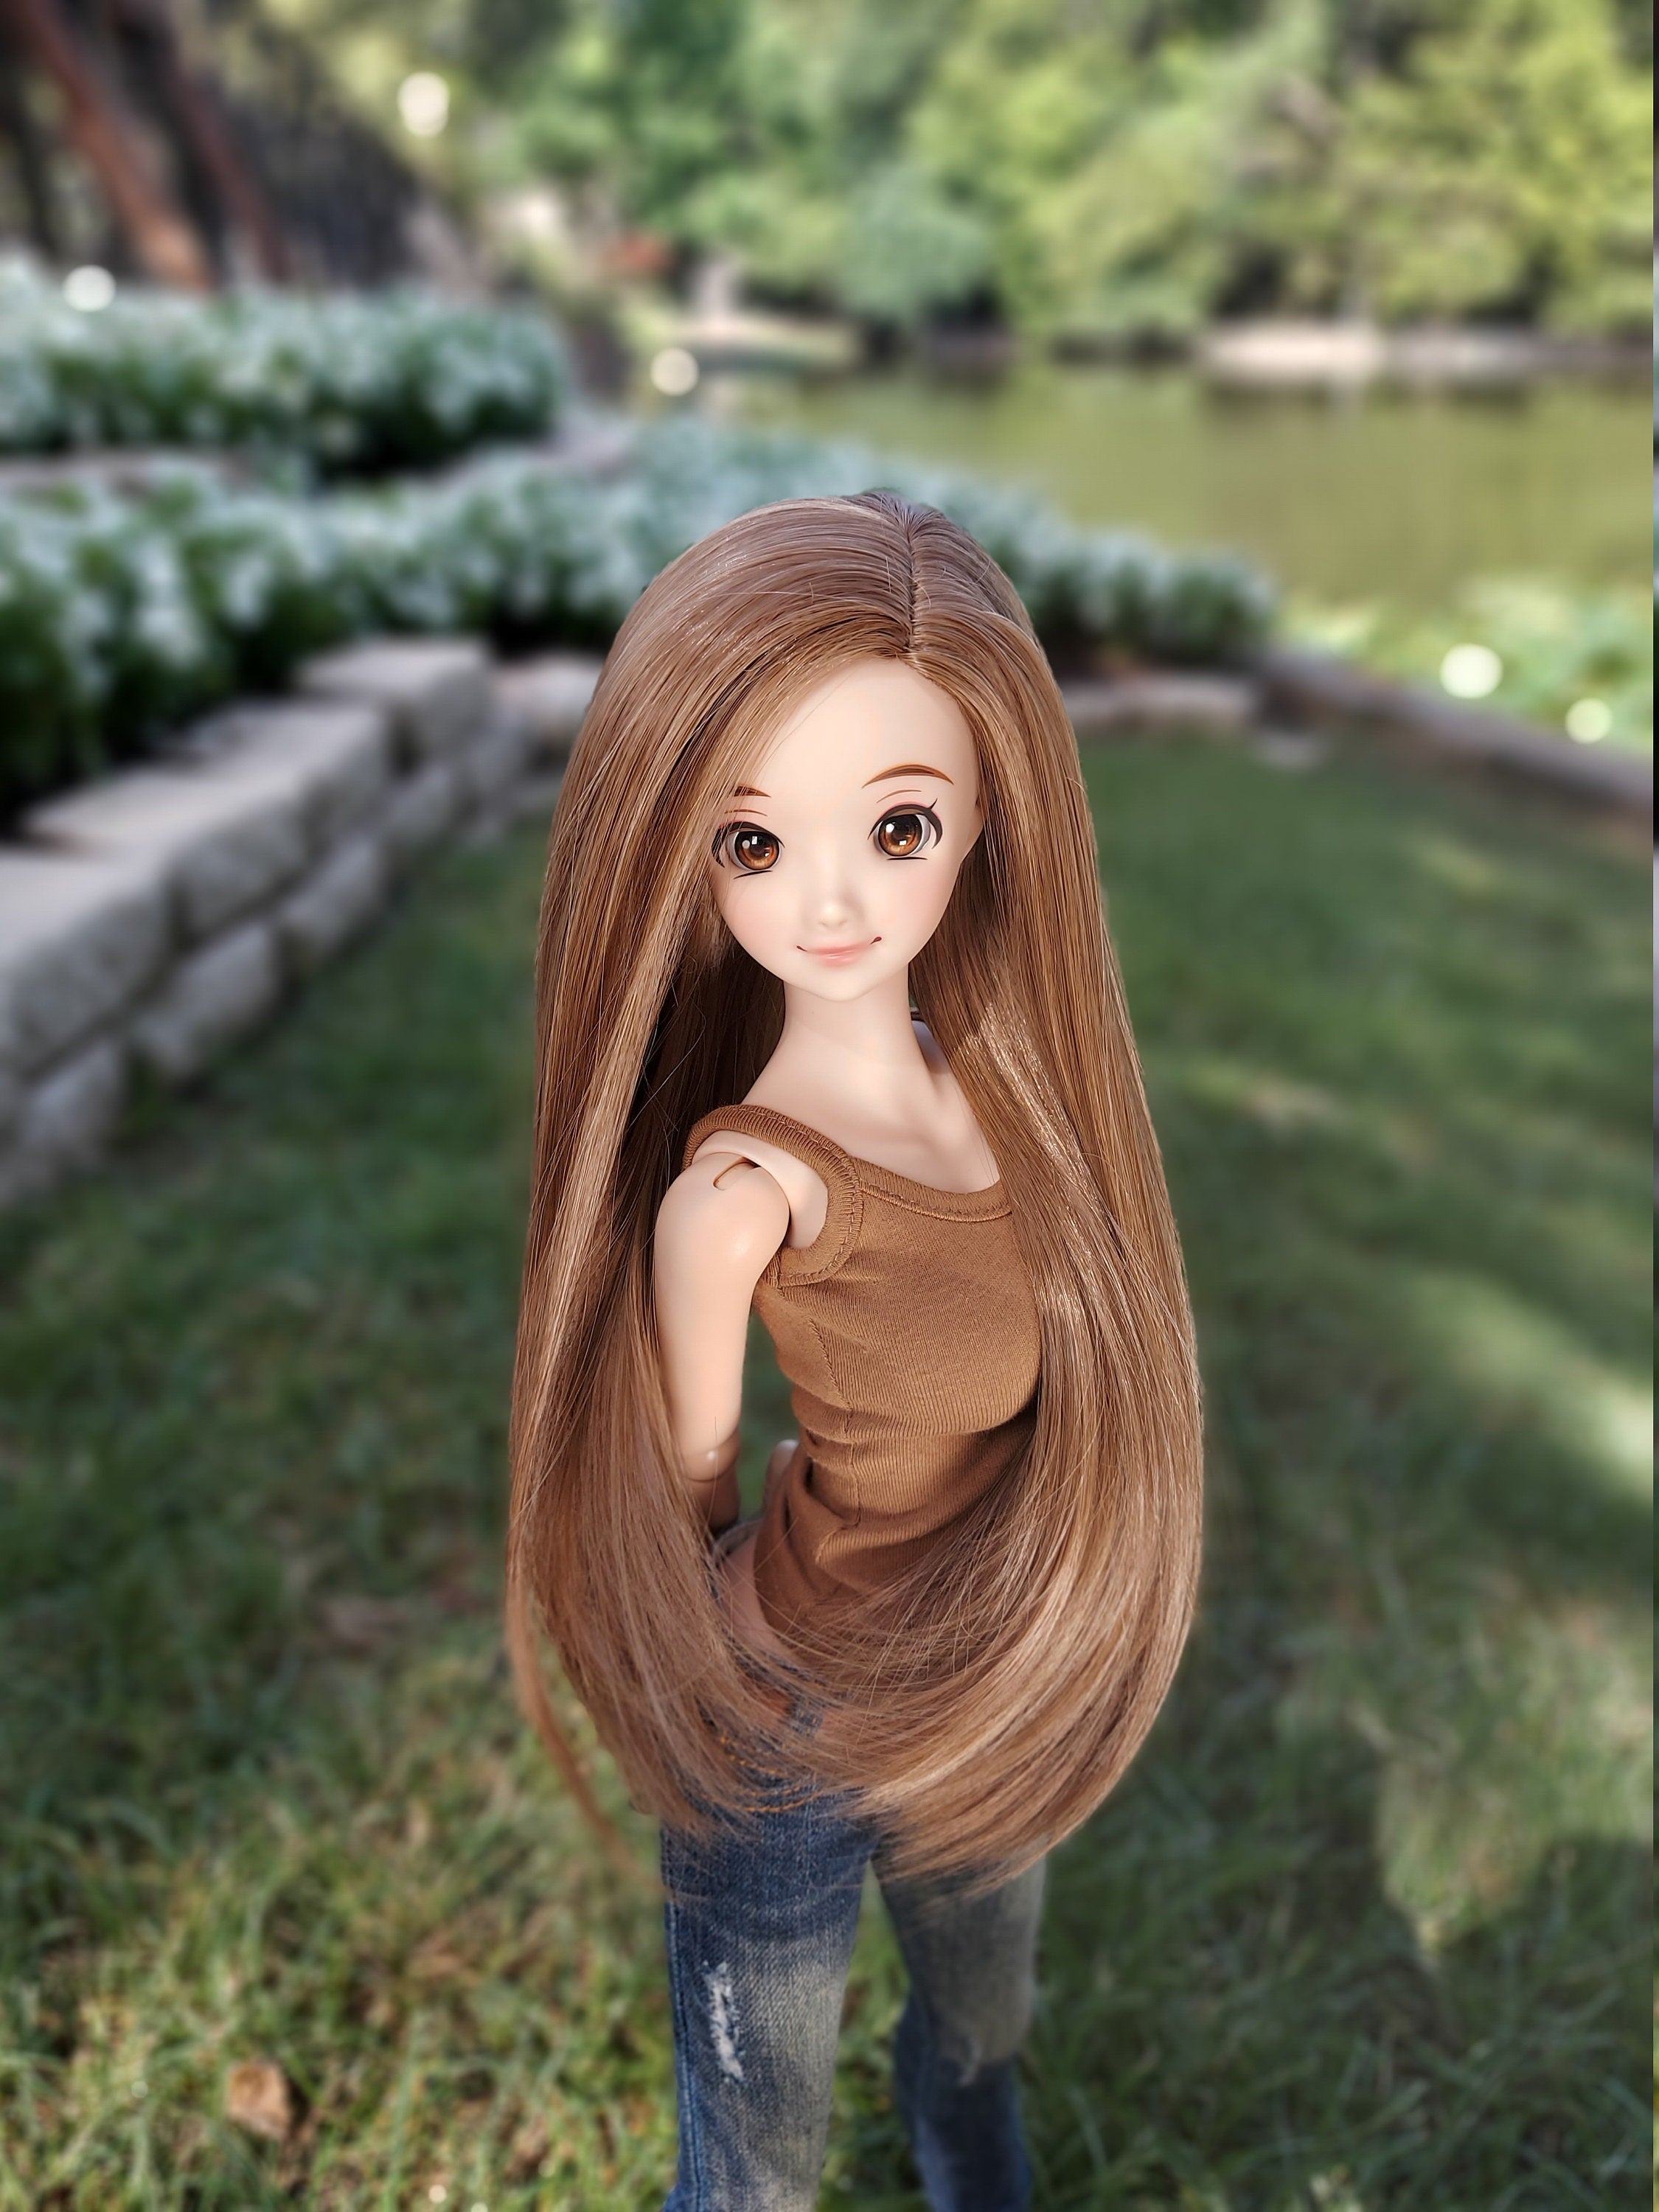 Custom doll Wig for Smart Dolls- Heat Safe - Tangle Resistant- 8.5" head size of Bjd, SD, Dollfie Dream dolls caramel brown